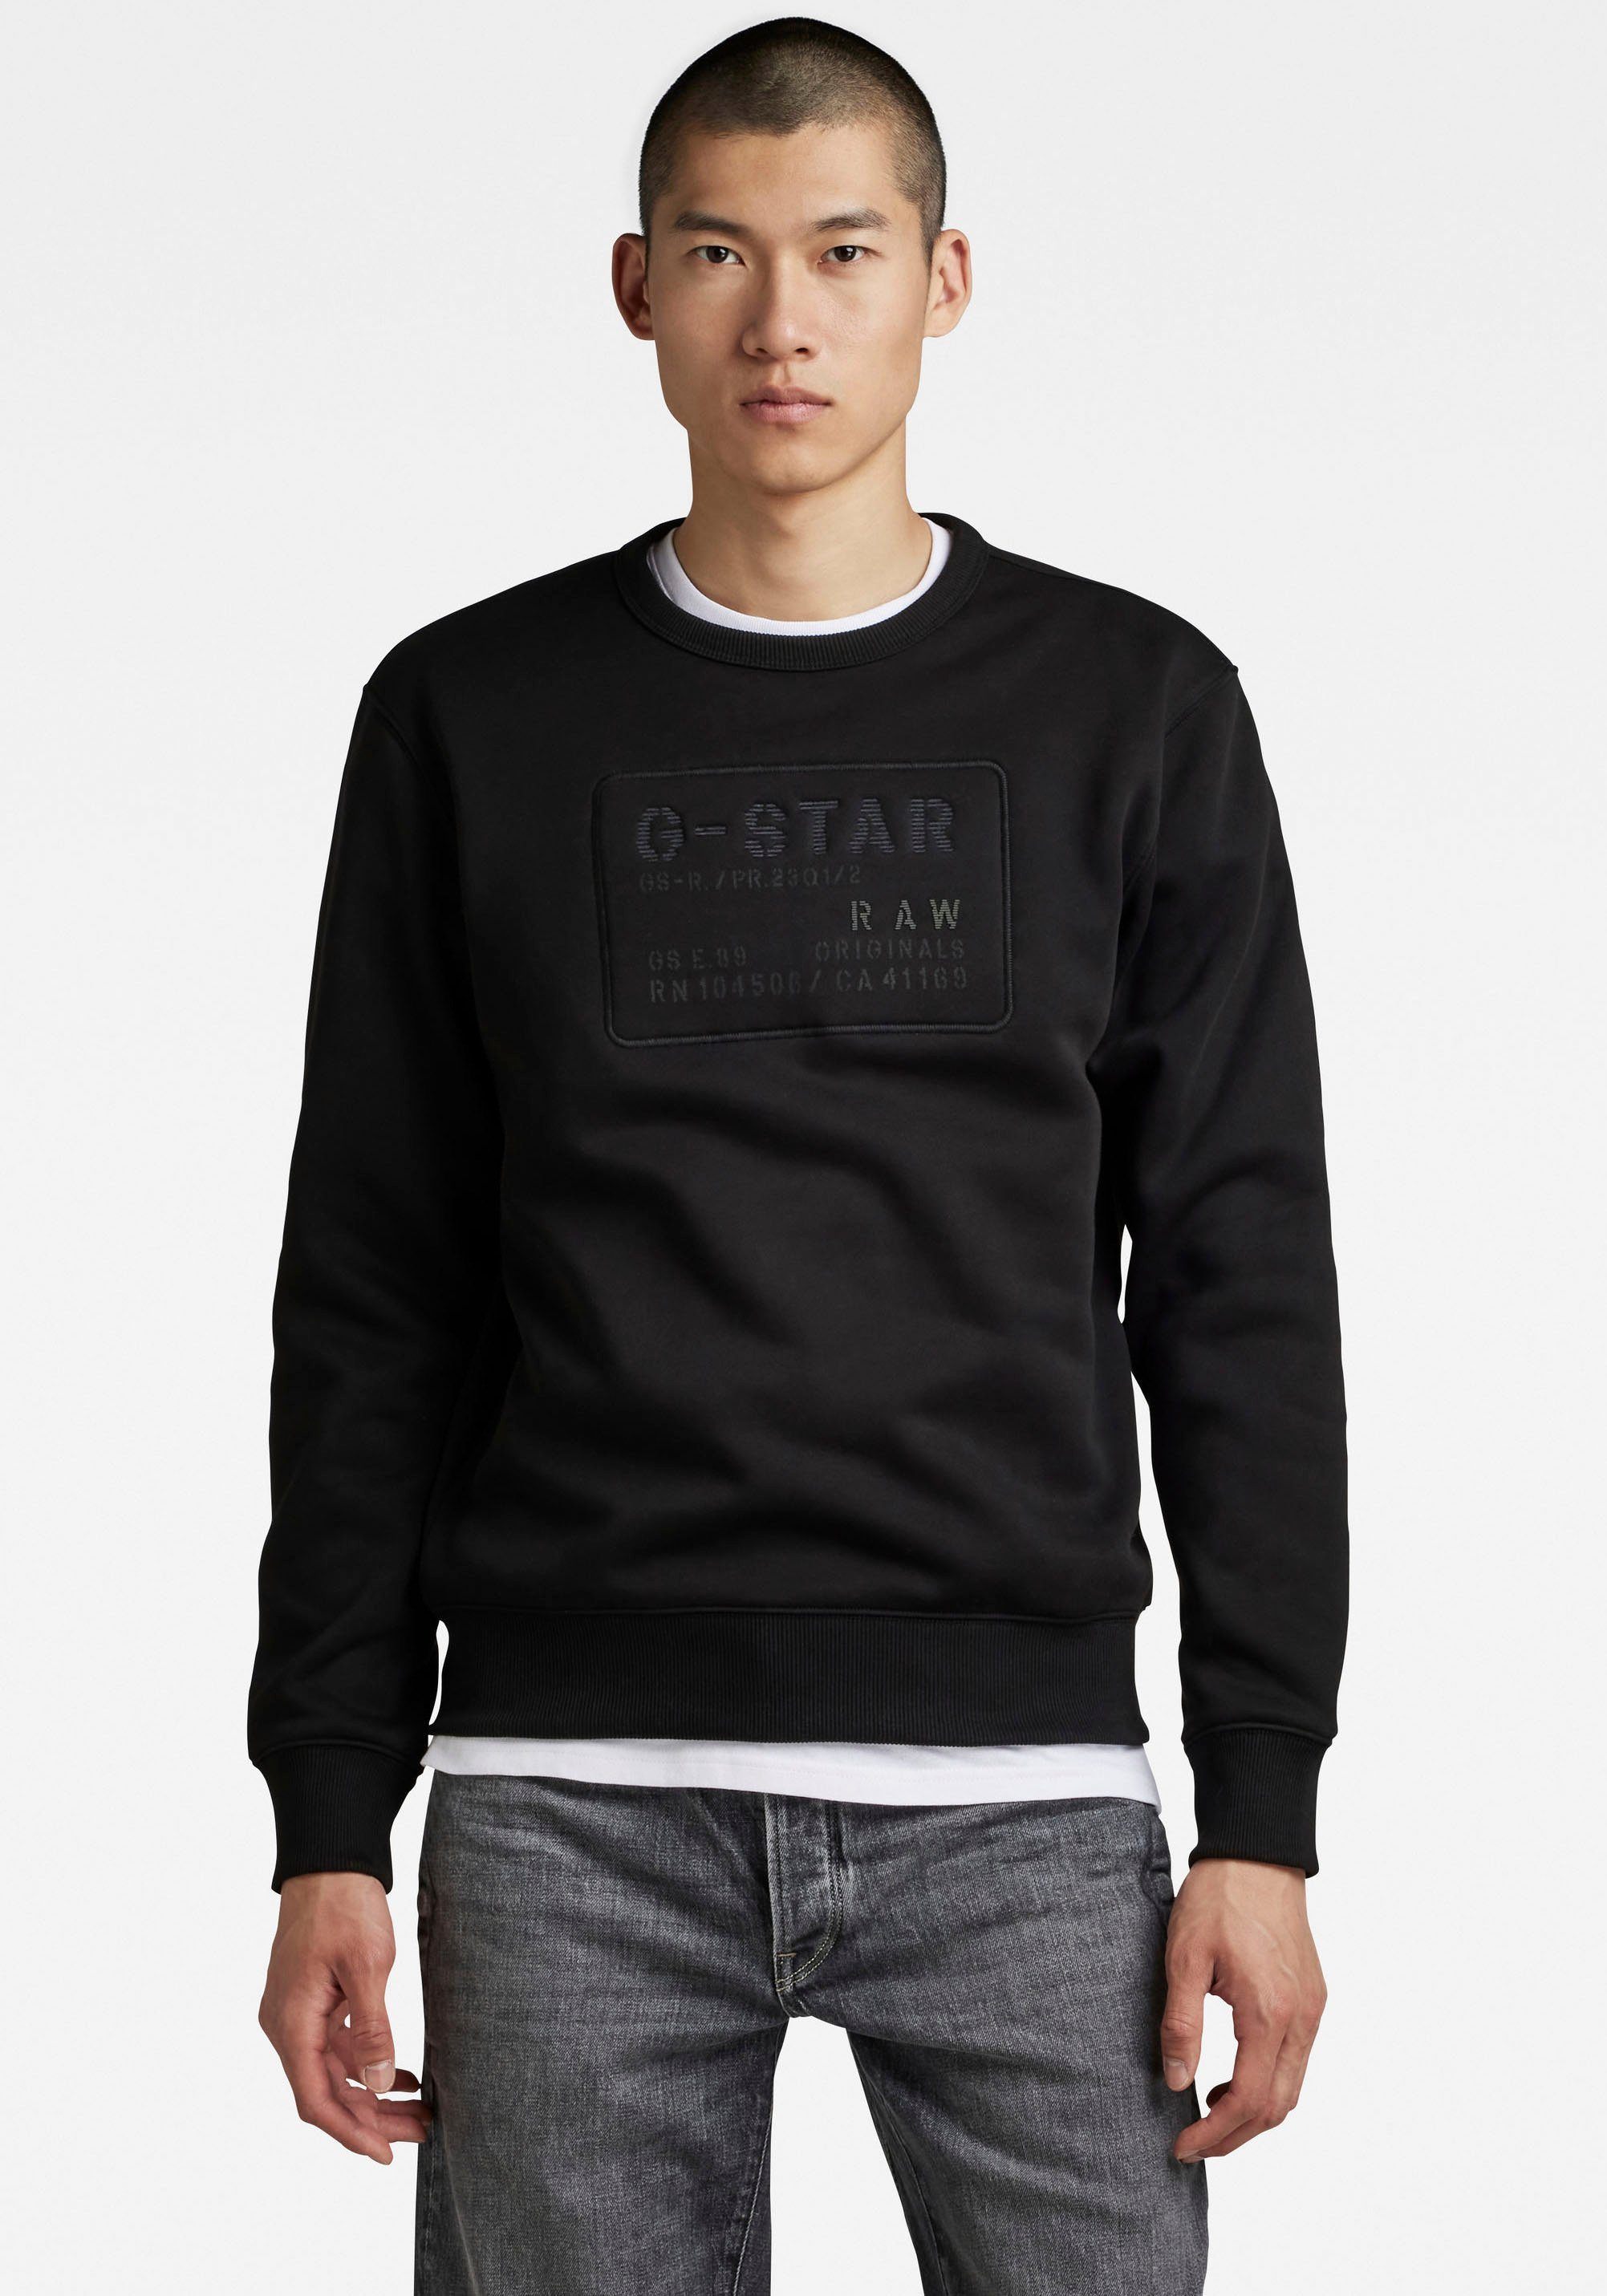 G-Star RAW Sweatshirt Sweatshirt Originals Dark black